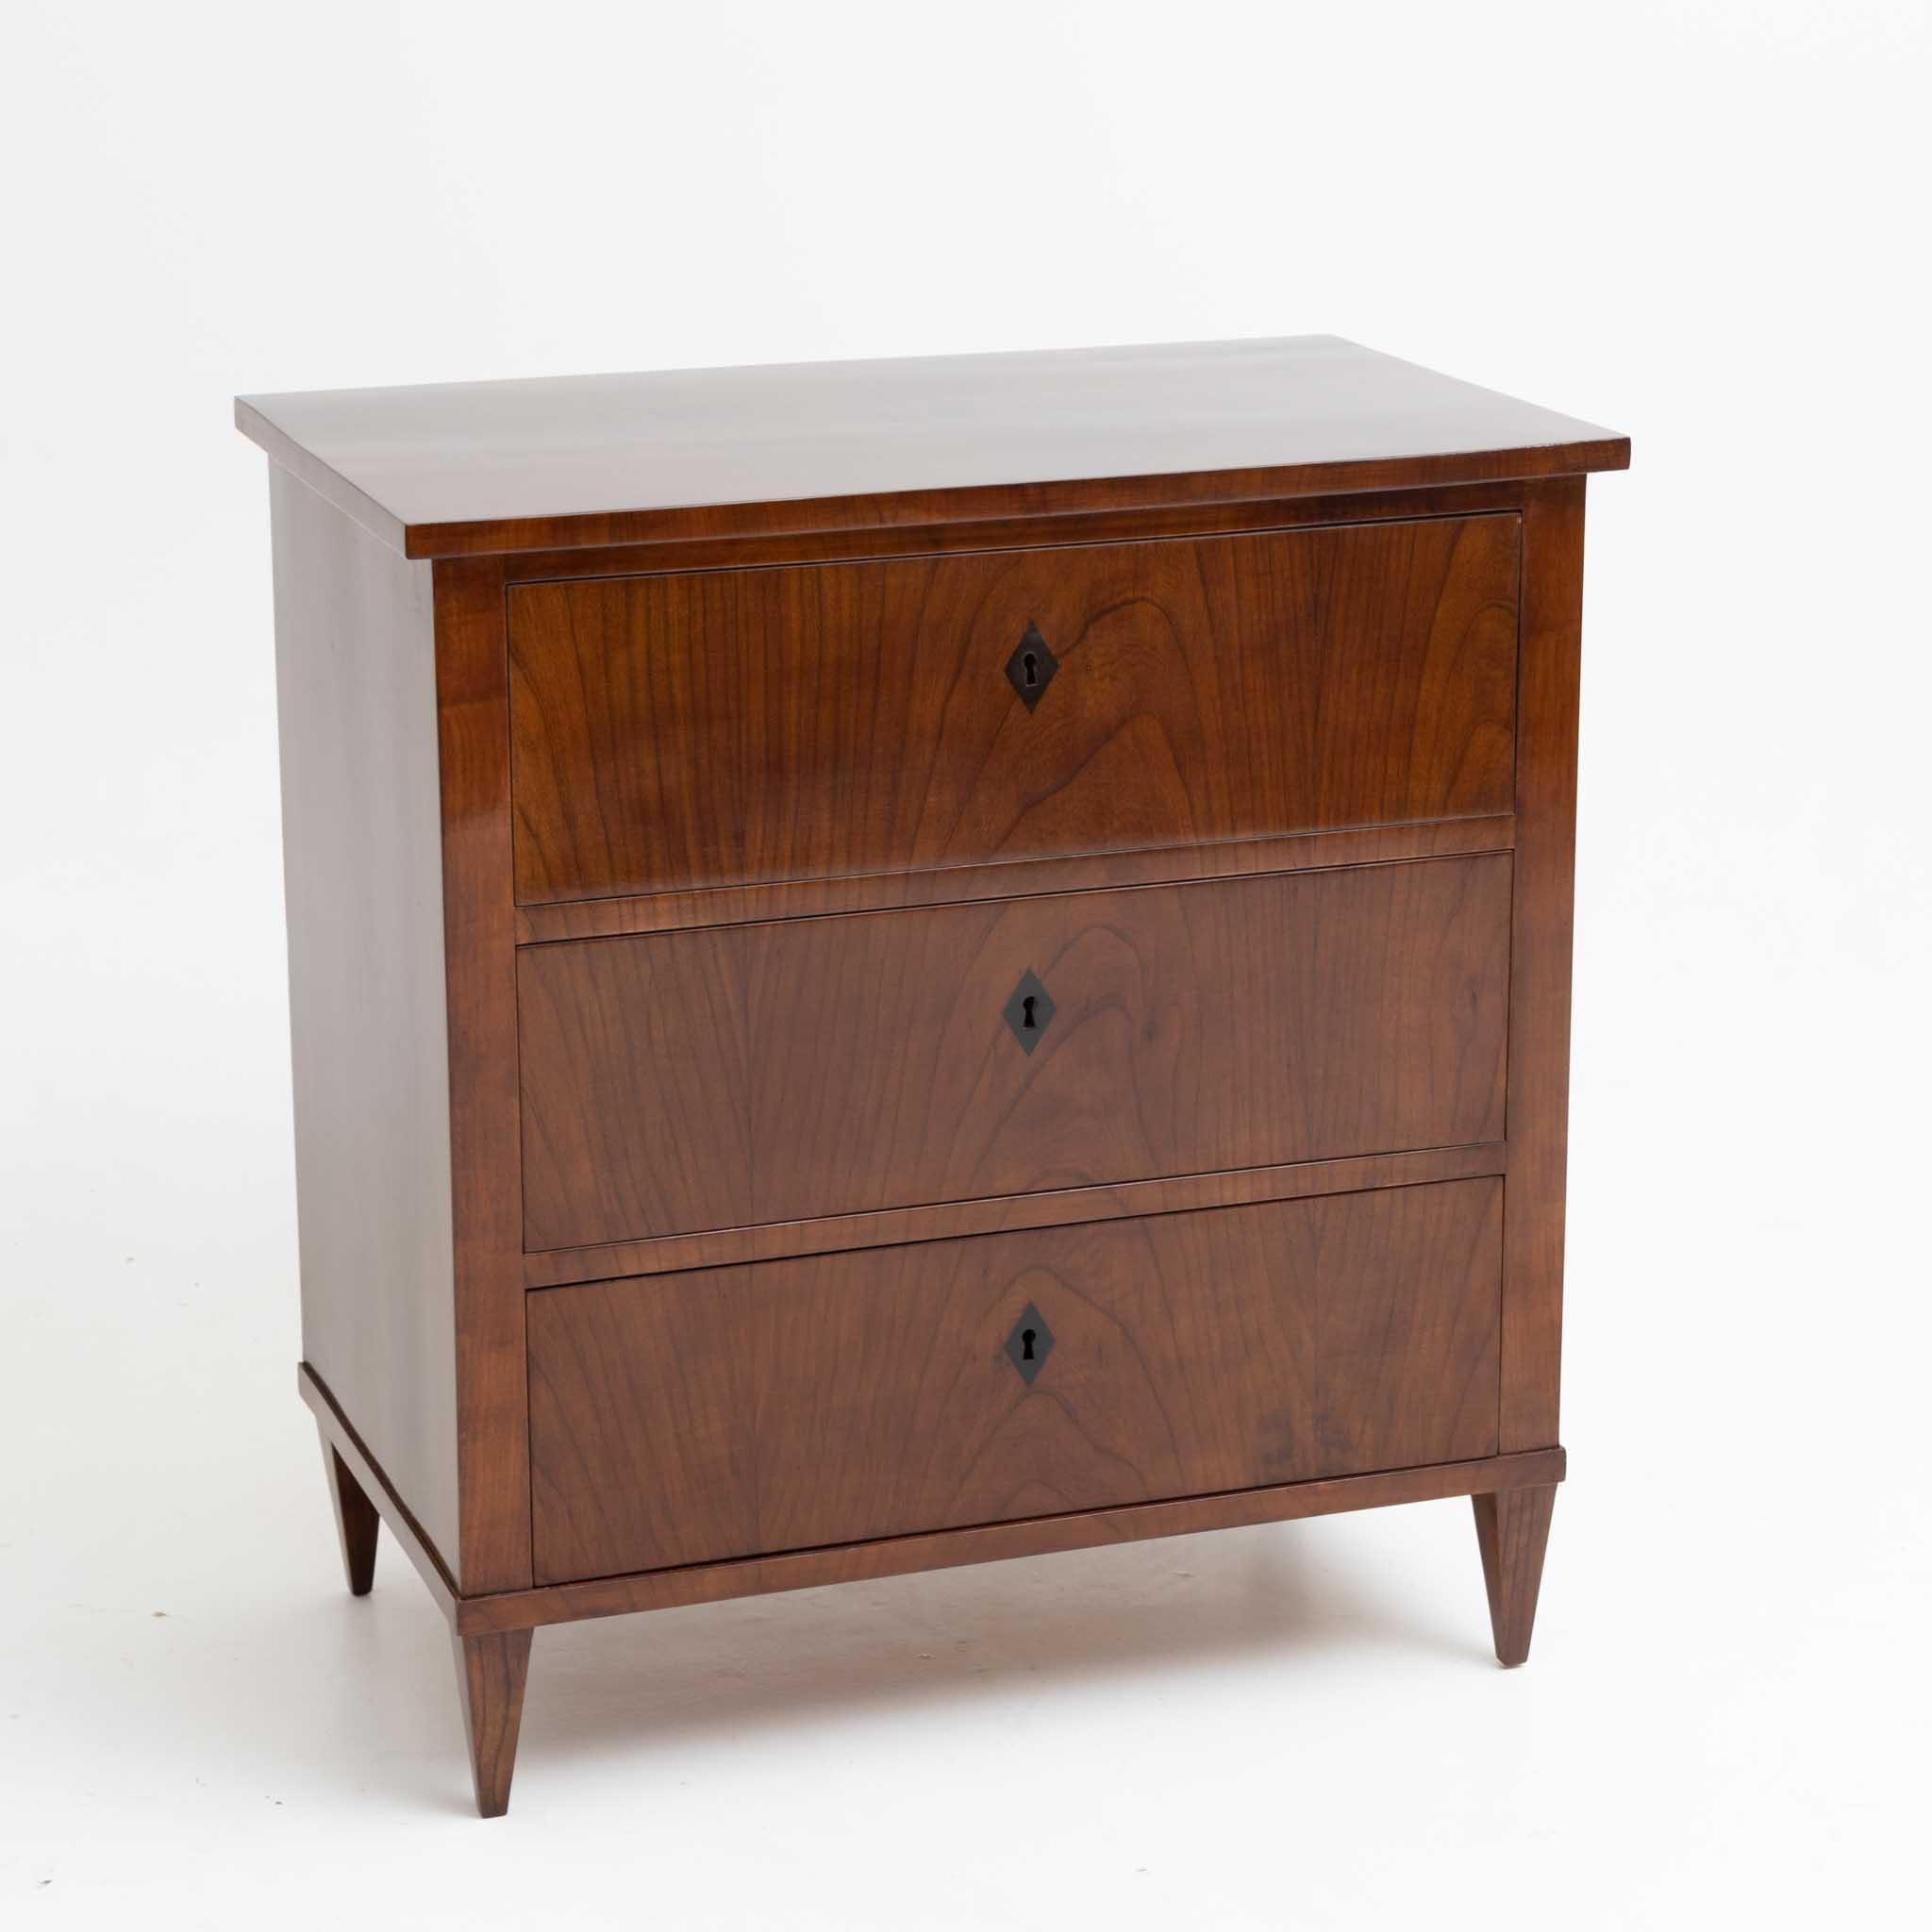 Narrow Biedermeier chest of drawers with three drawers and ebonized key plates, veneered in walnut.